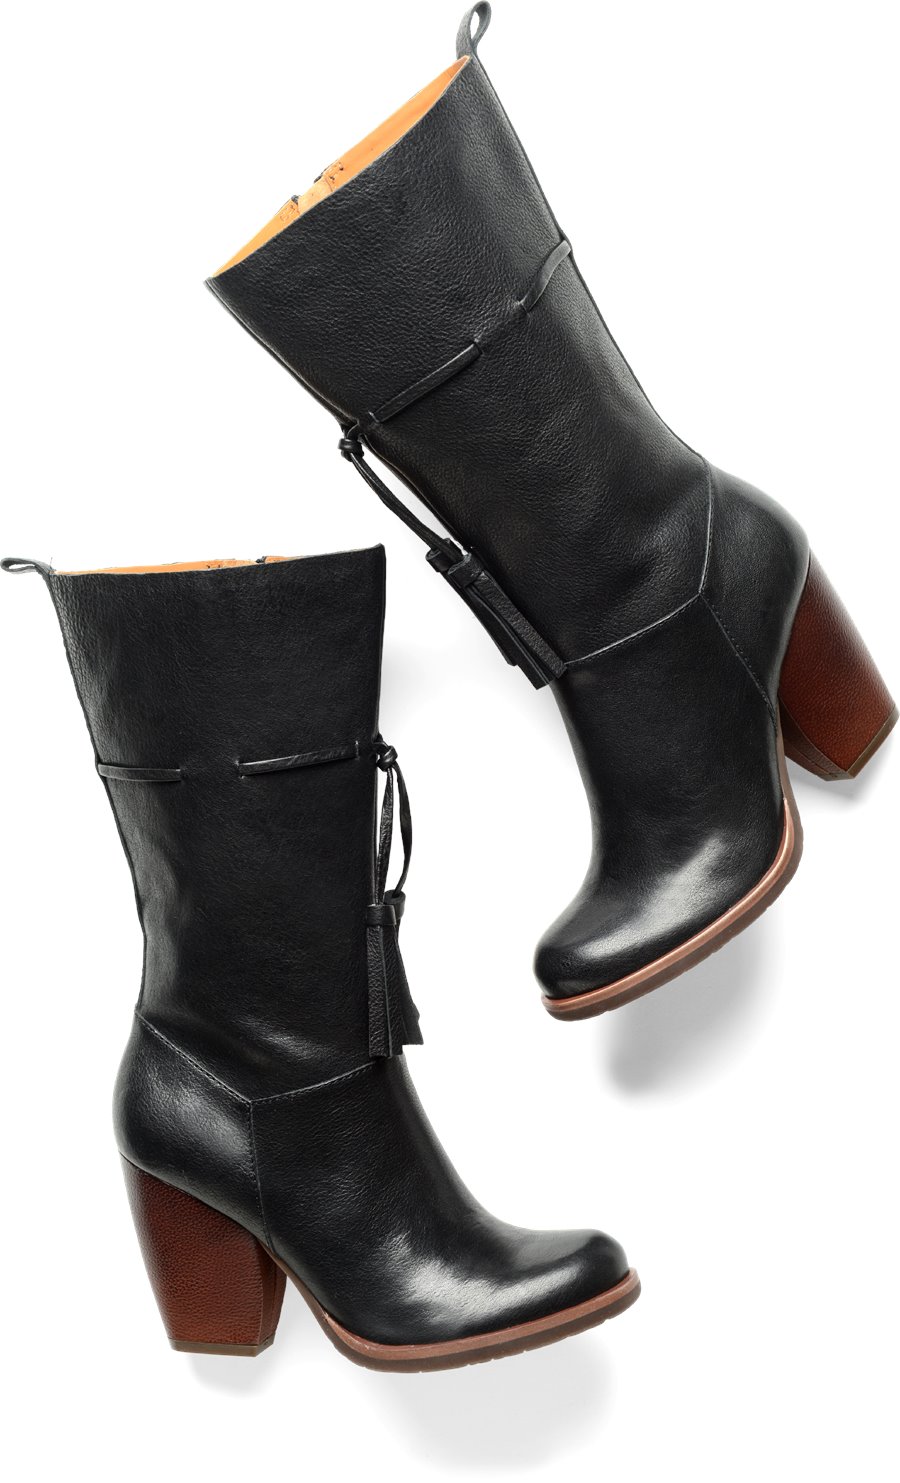 Korkease Shoes - Korkease Umbriel Women's Shoes in Black color. - #korkeaseshoes #blackshoes